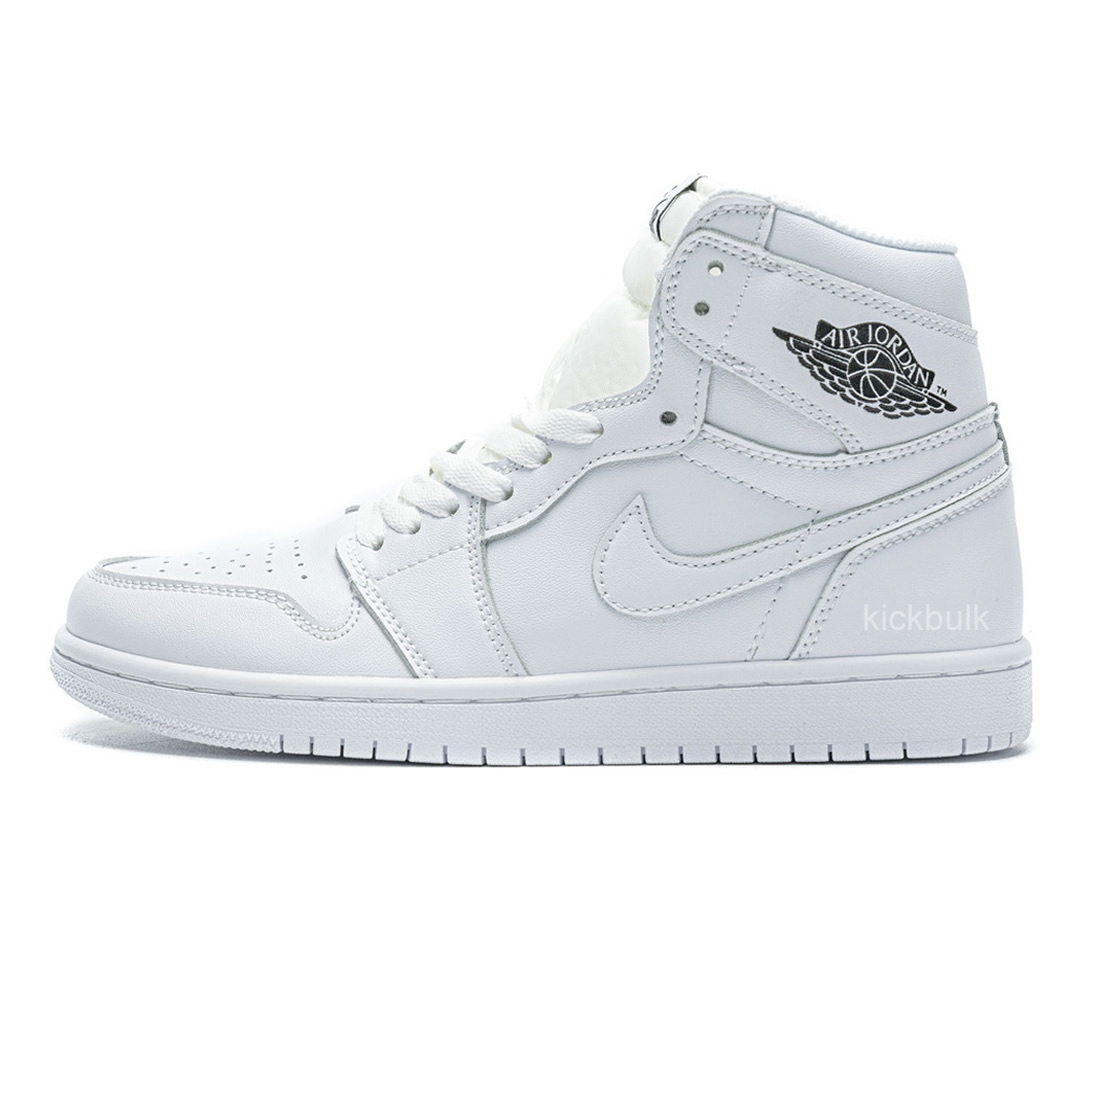 Nike Air Jordan 1 High All White 555088 111 1 - kickbulk.co